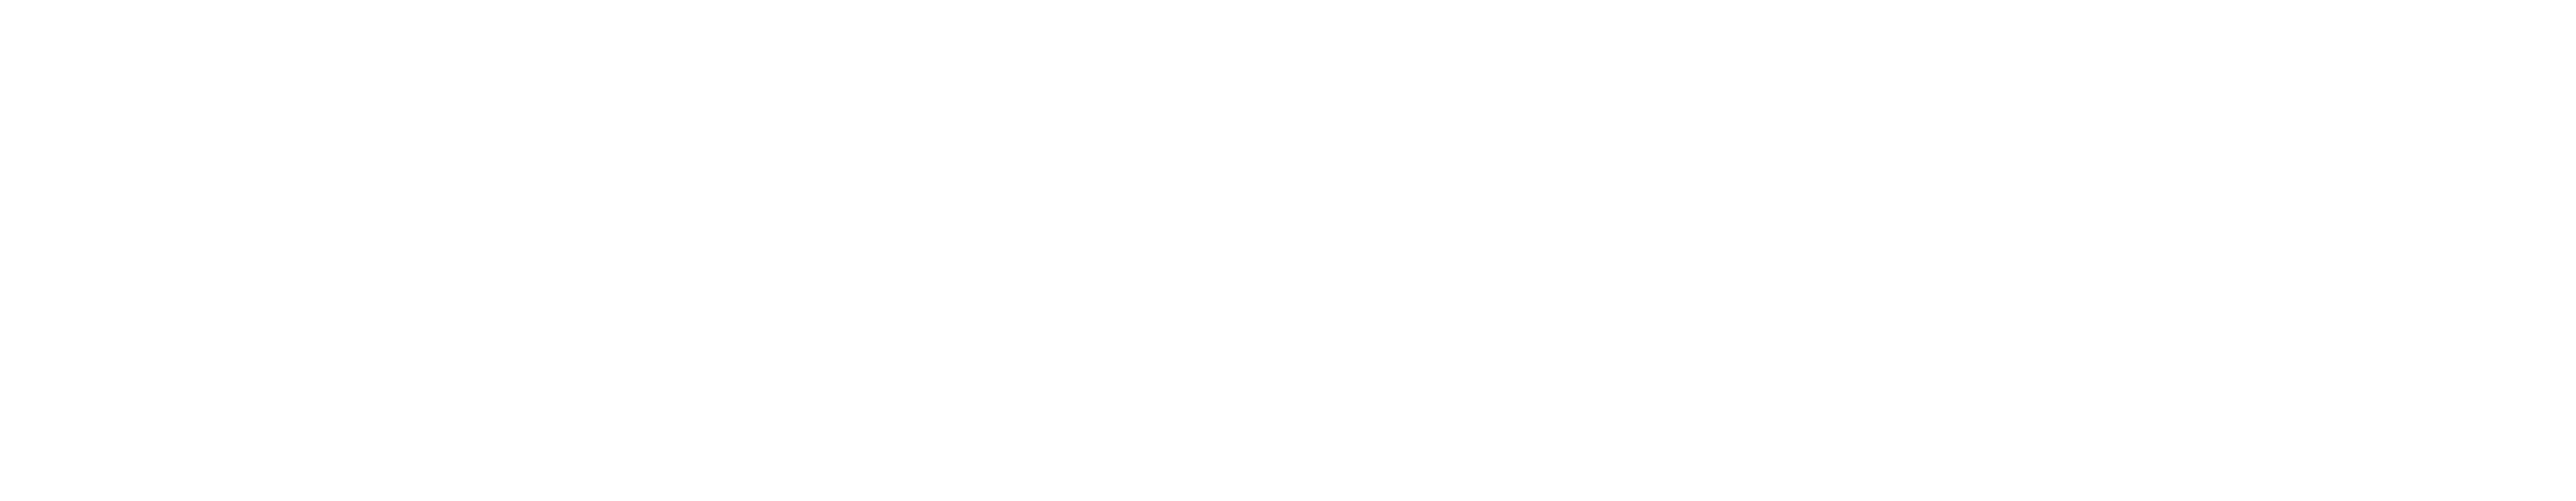 Logo Šlechta 25 let DE